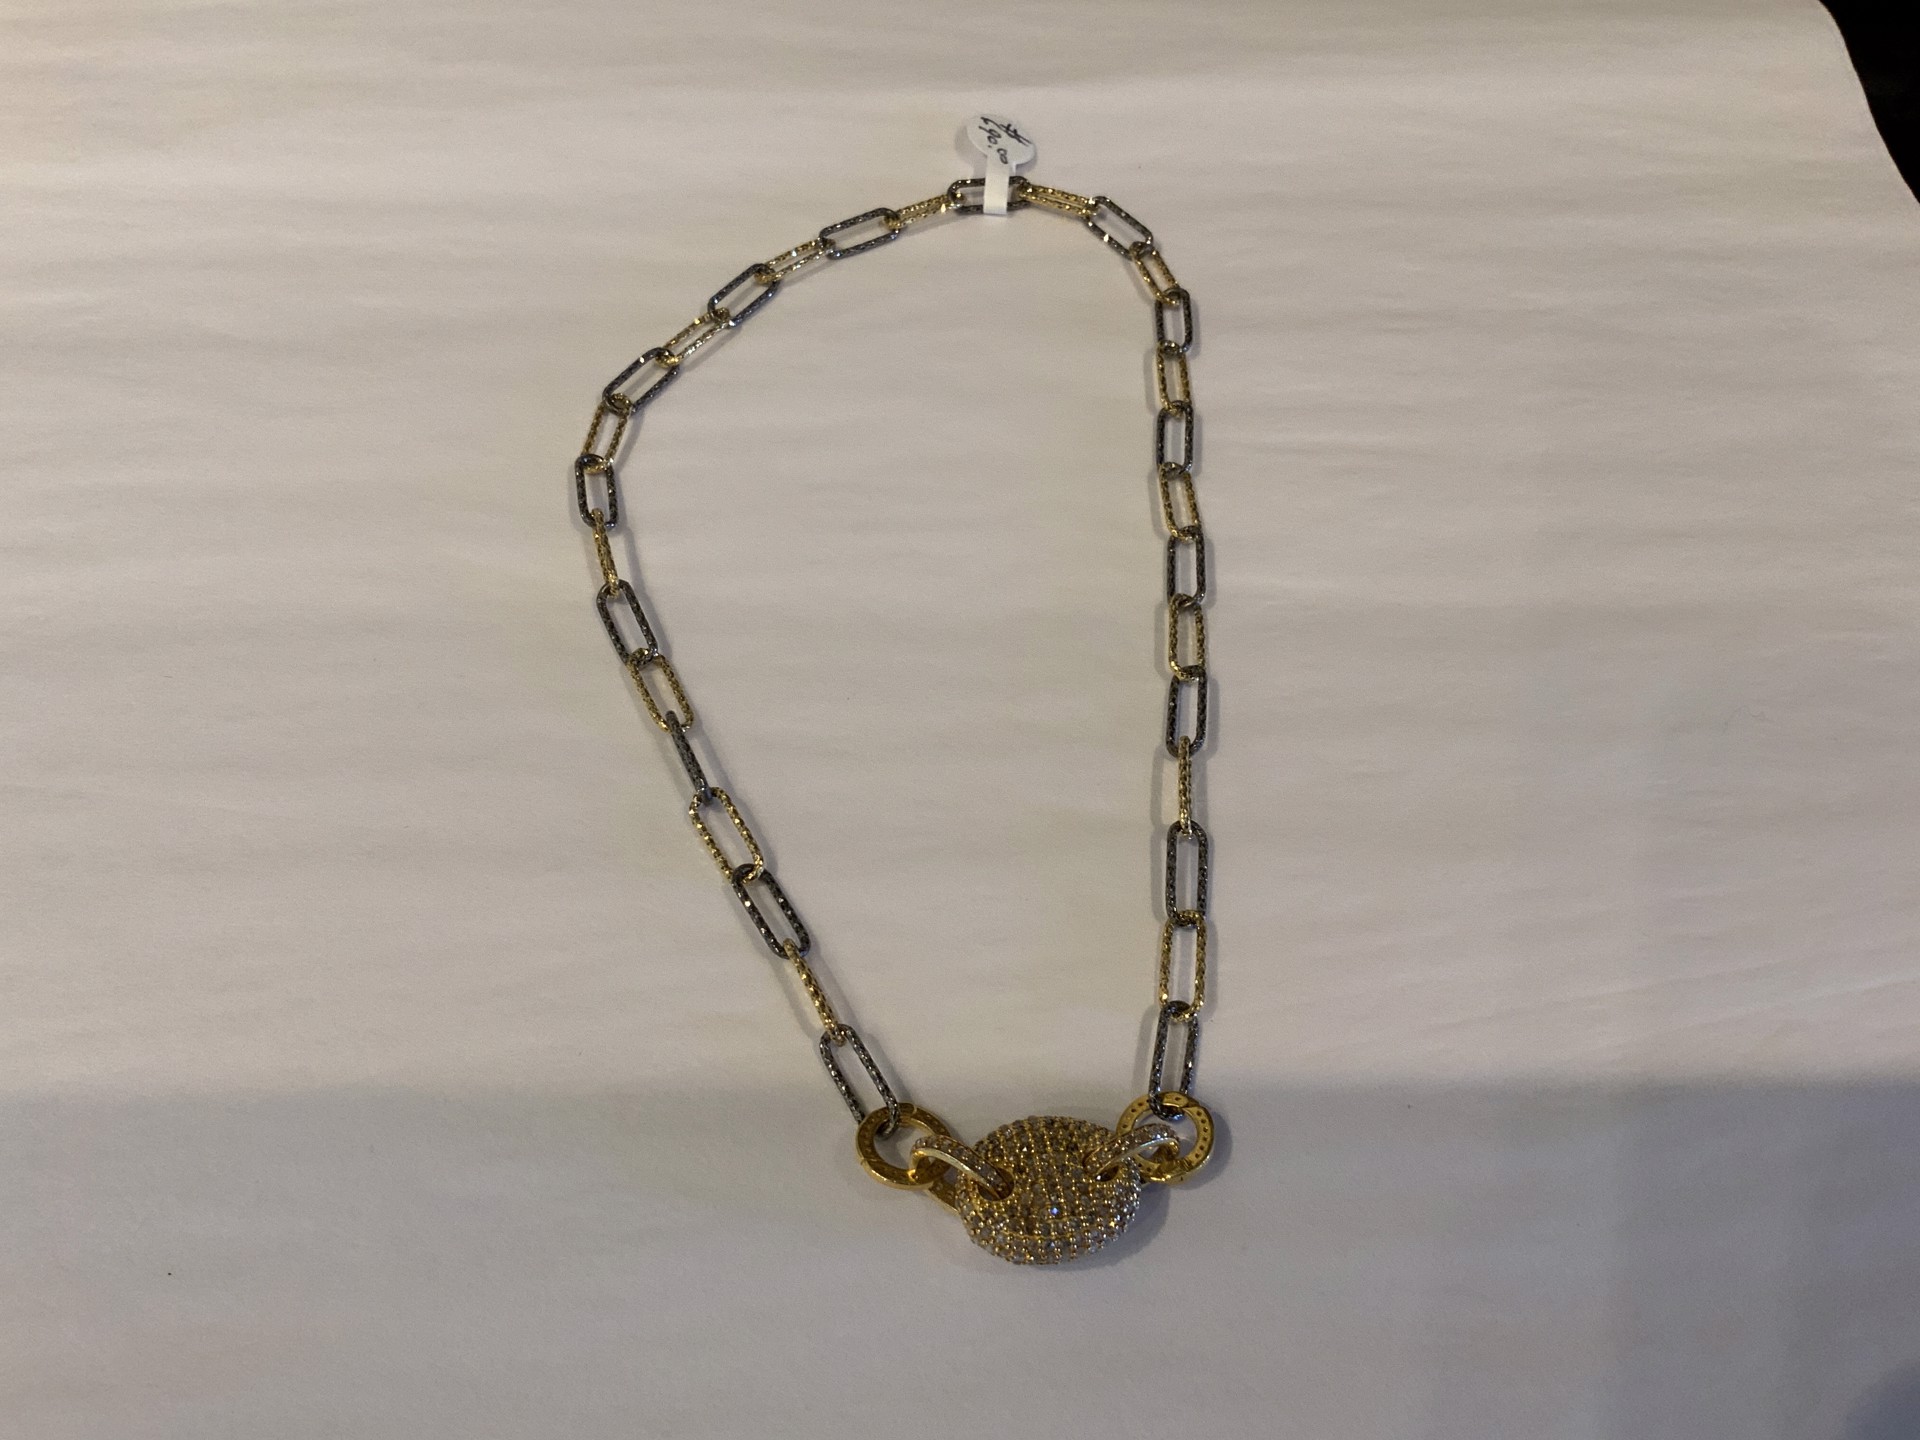 Two Tonw Paper Clip Pave Diamond Necklace by Karen Birchmier